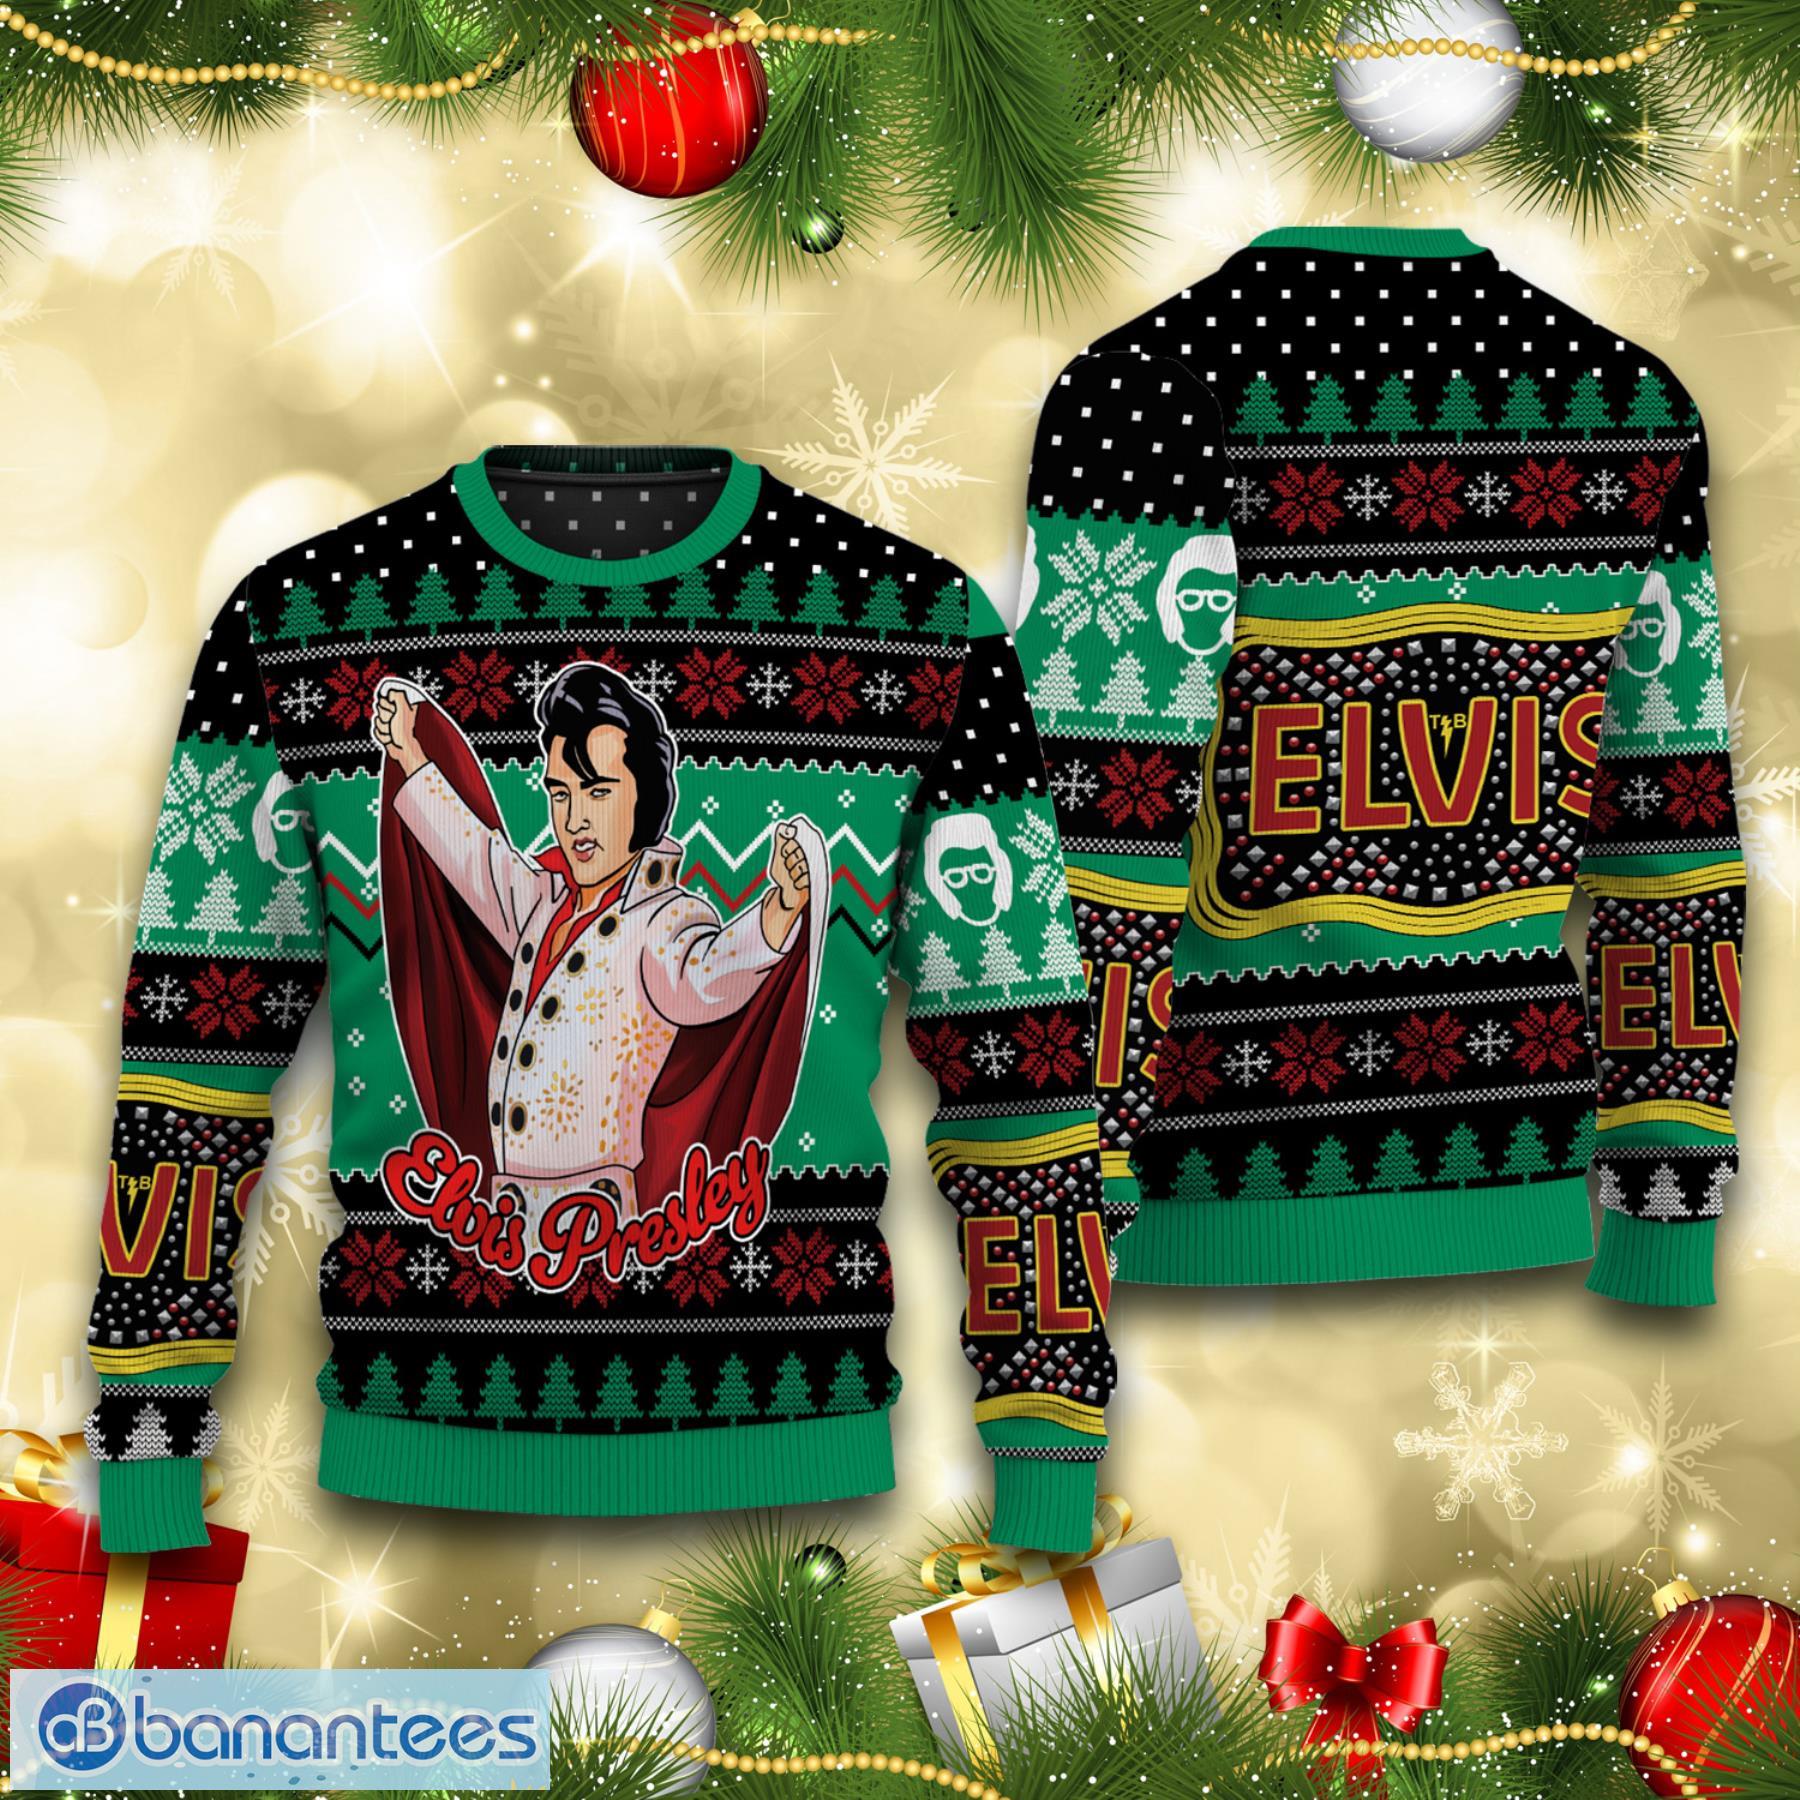 Funny Elviss Presleyy Belt Buckle Sign With Rhinestone Christmas Sweater Product Photo 1